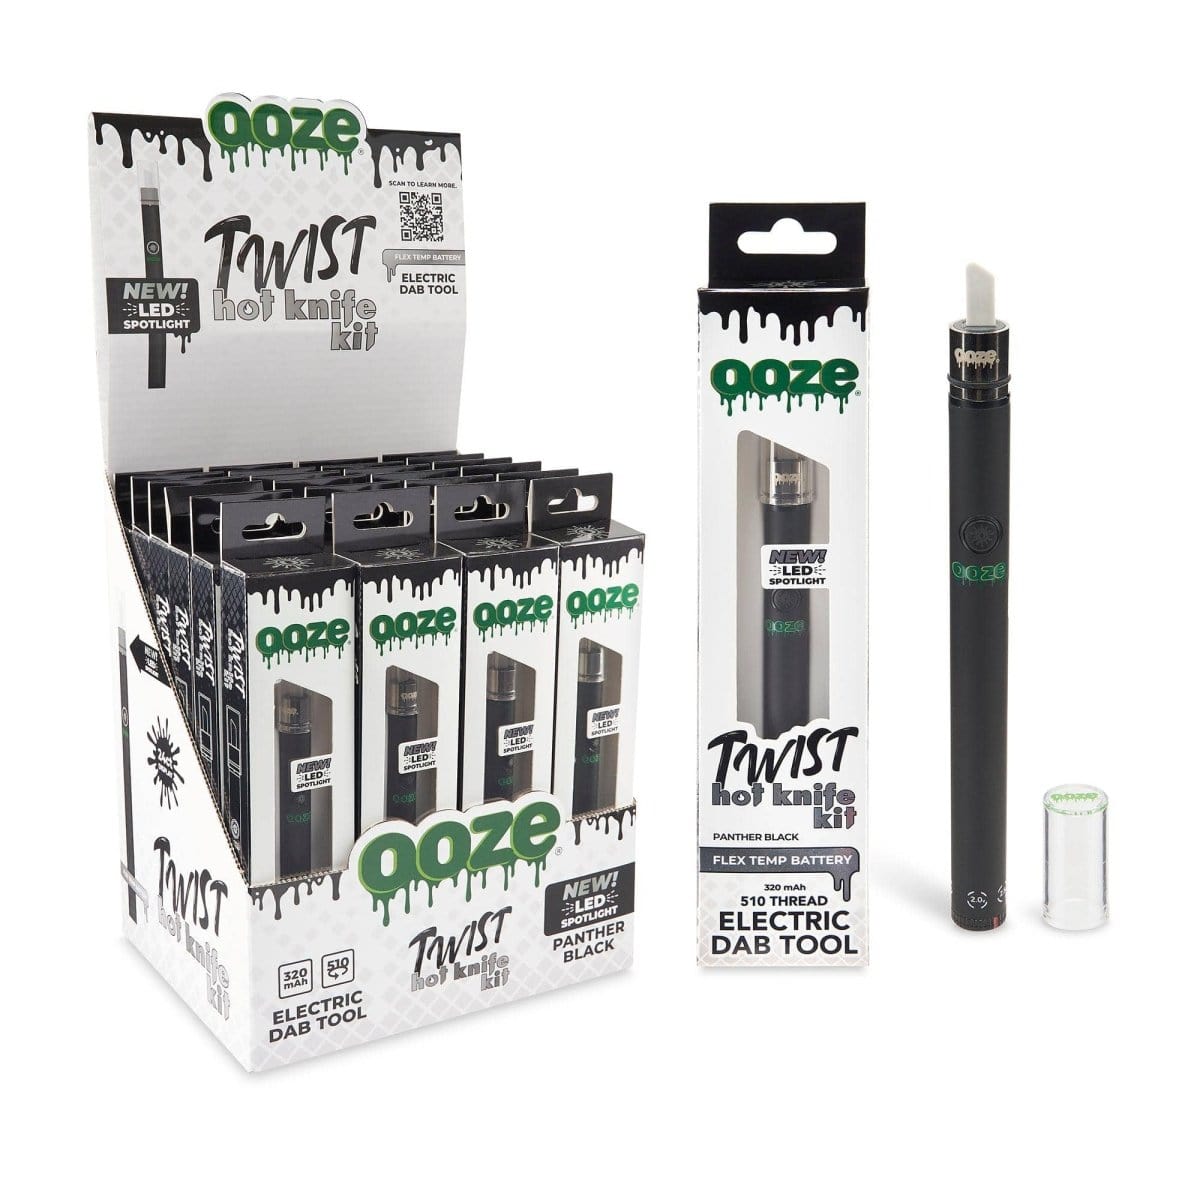 Ooze Batteries and Vapes Ooze Twist Hot Knife Kit – New LED Spotlight